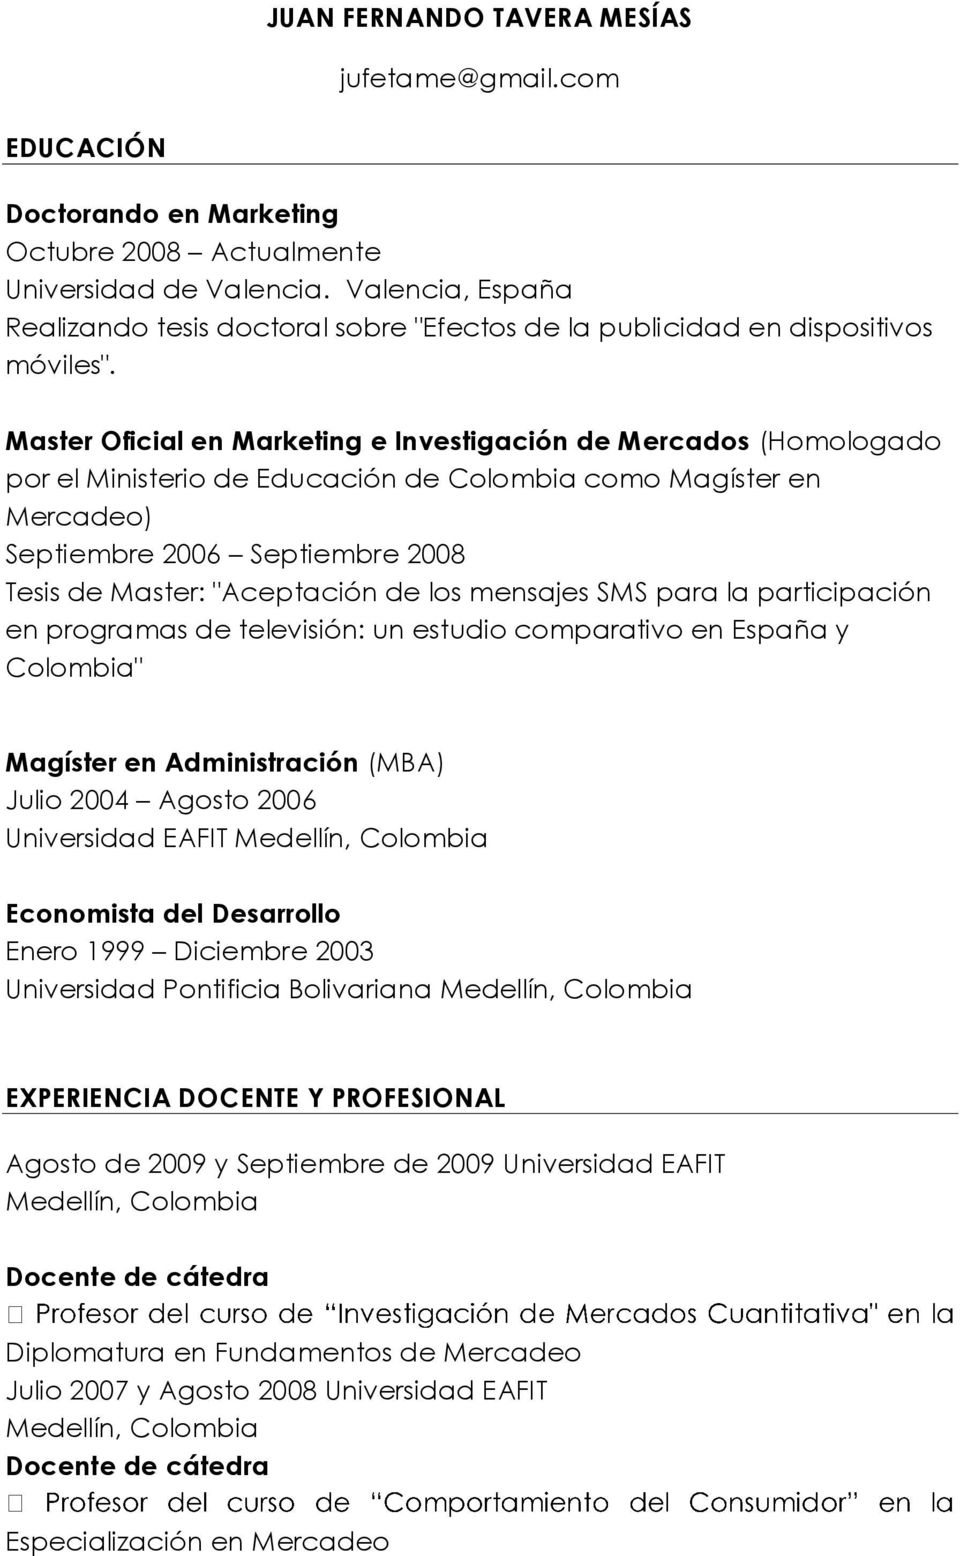 Master Oficial en Marketing e Investigación de Mercados (Homologado por el Ministerio de Educación de Colombia como Magíster en Mercadeo) Septiembre 2006 Septiembre 2008 Tesis de Master: "Aceptación